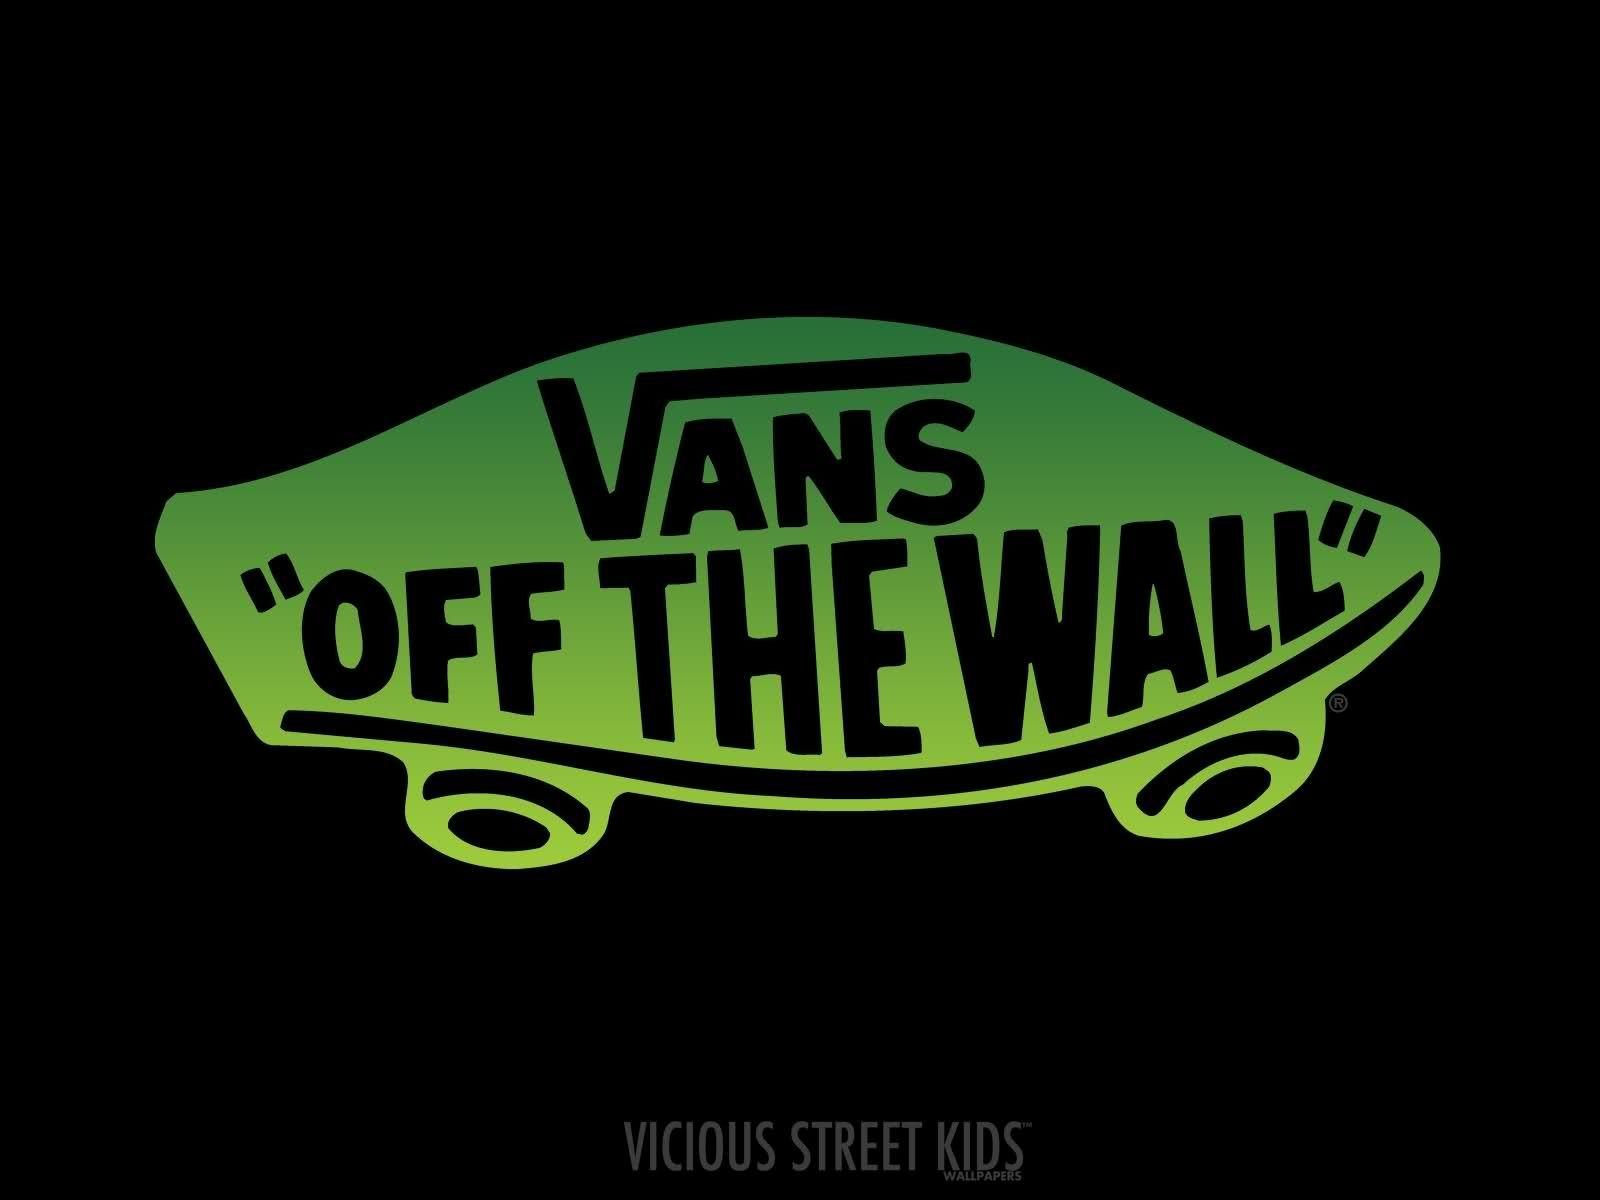 Vans Off The Wall Logos Cool Wallpaper. I HD Image